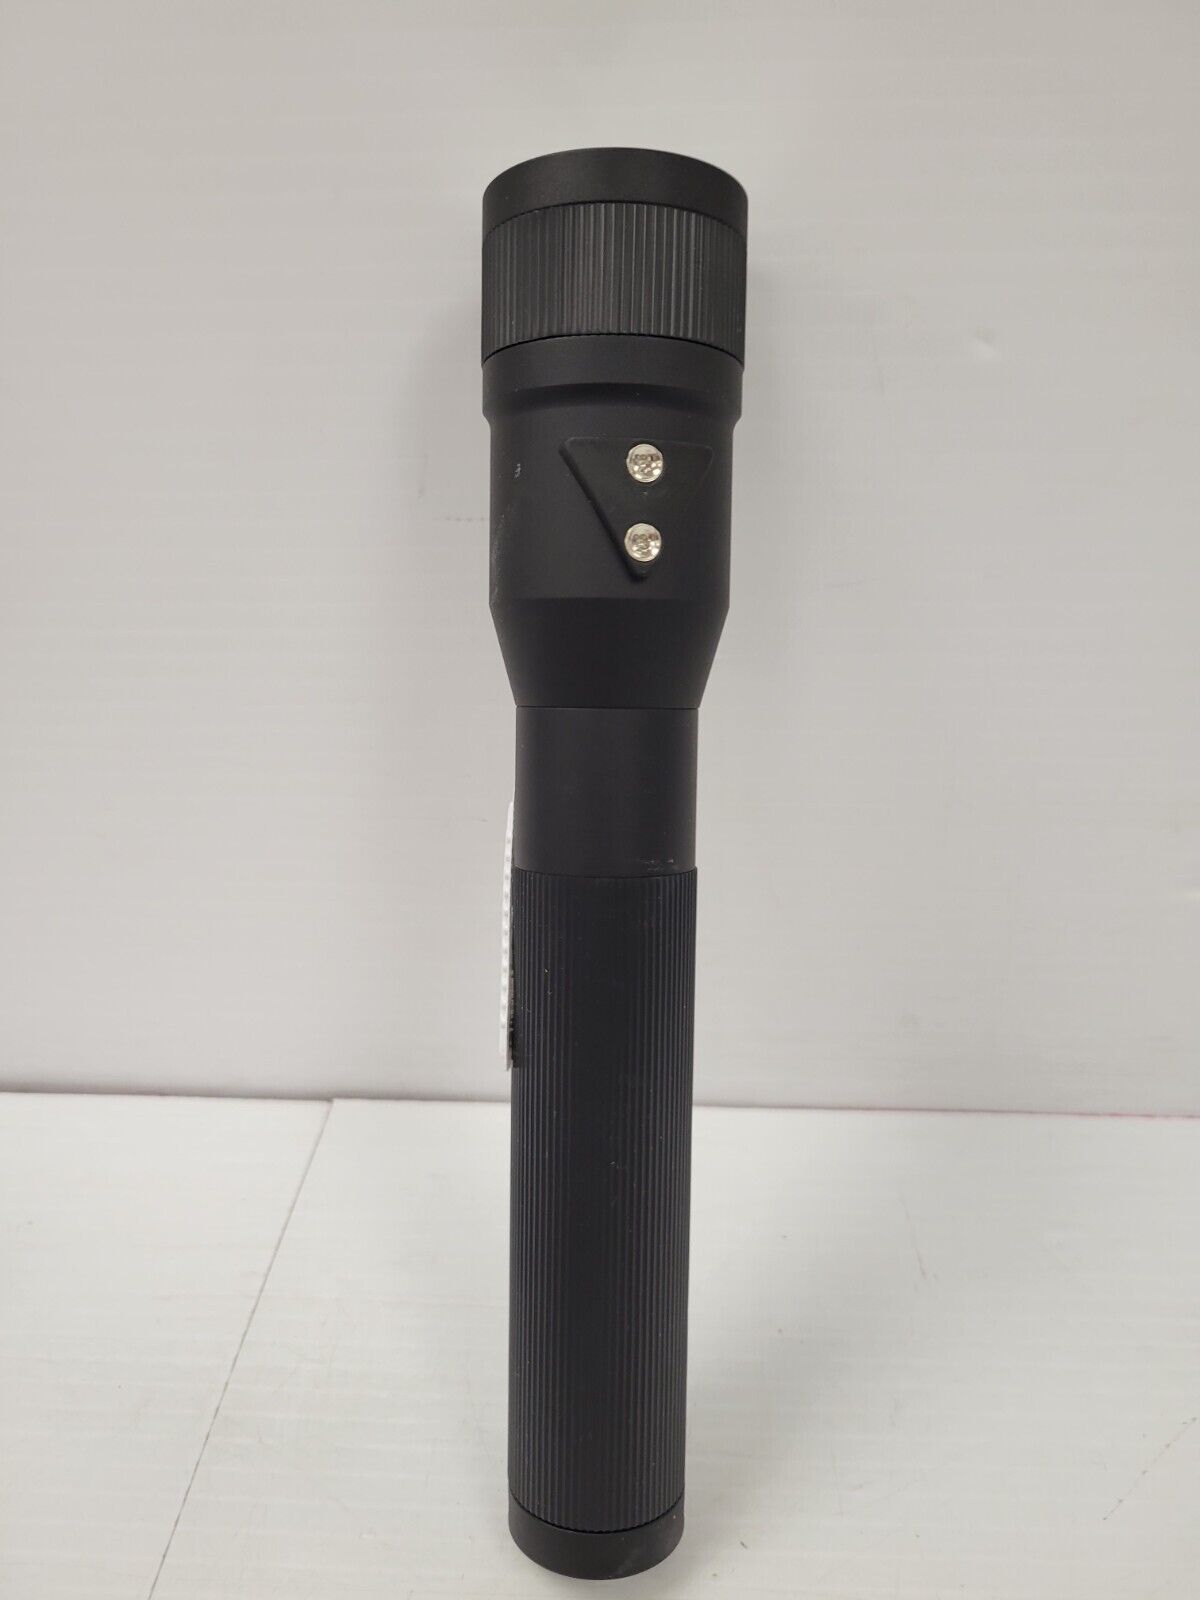 (52094-1) Streamlight Stinger LED Flashlight